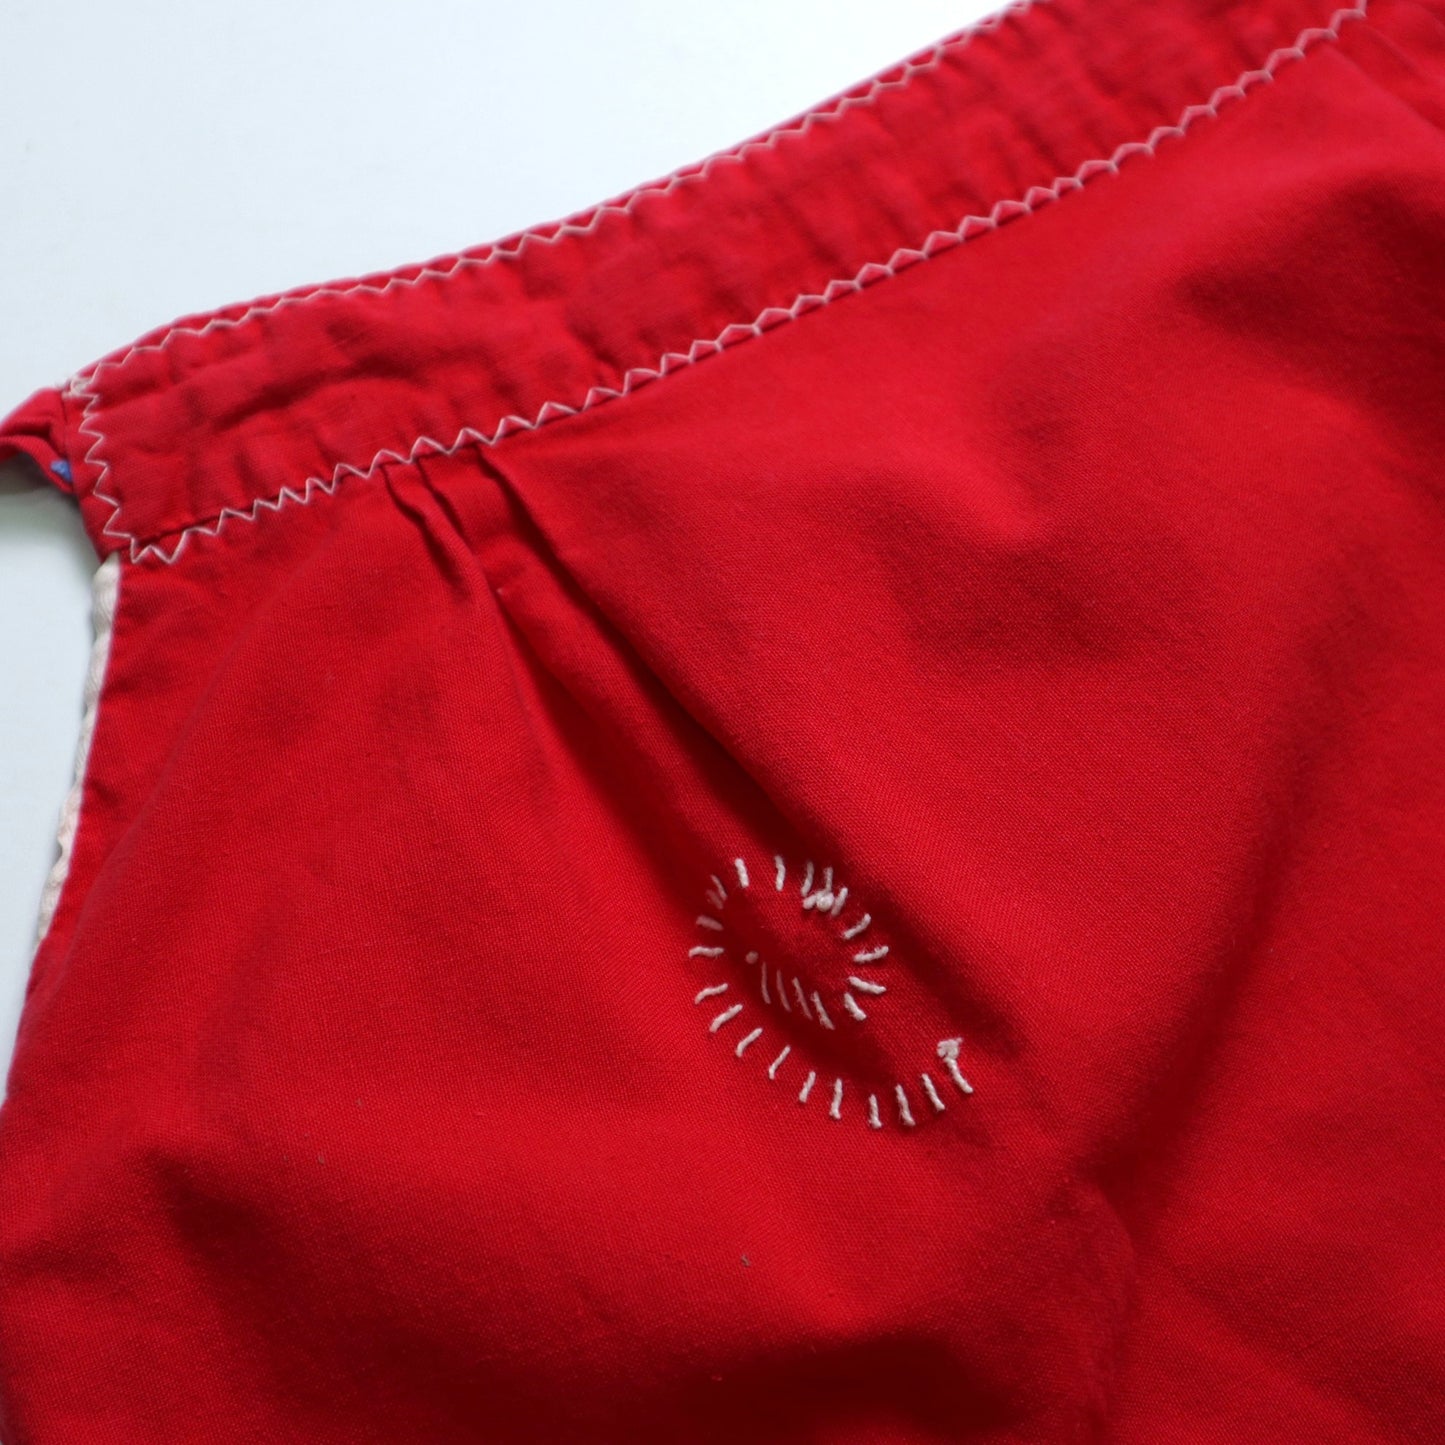 Handmade Apron 紅底葡萄牙手工刺繡圍裙 半身圍裙